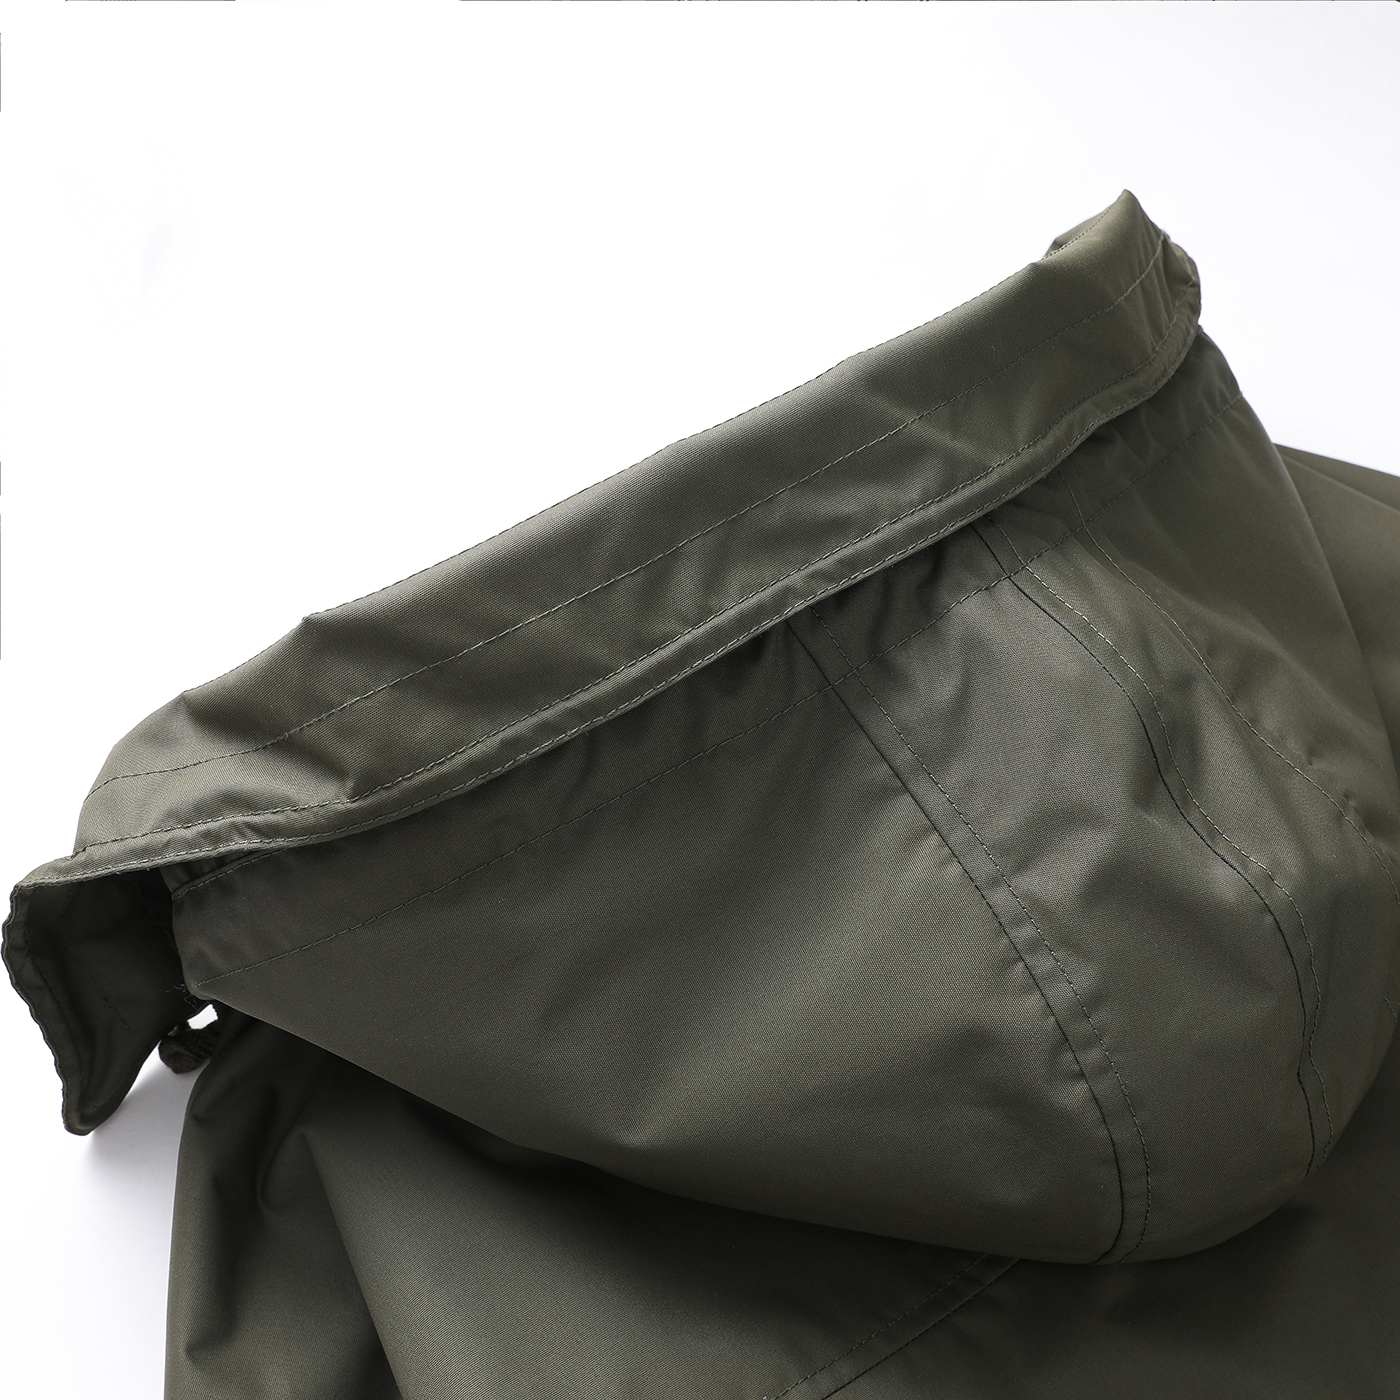 Wholesale Parka Men Winter Unisex Oversize Big Hoodie Jackets With Contrast Lining 